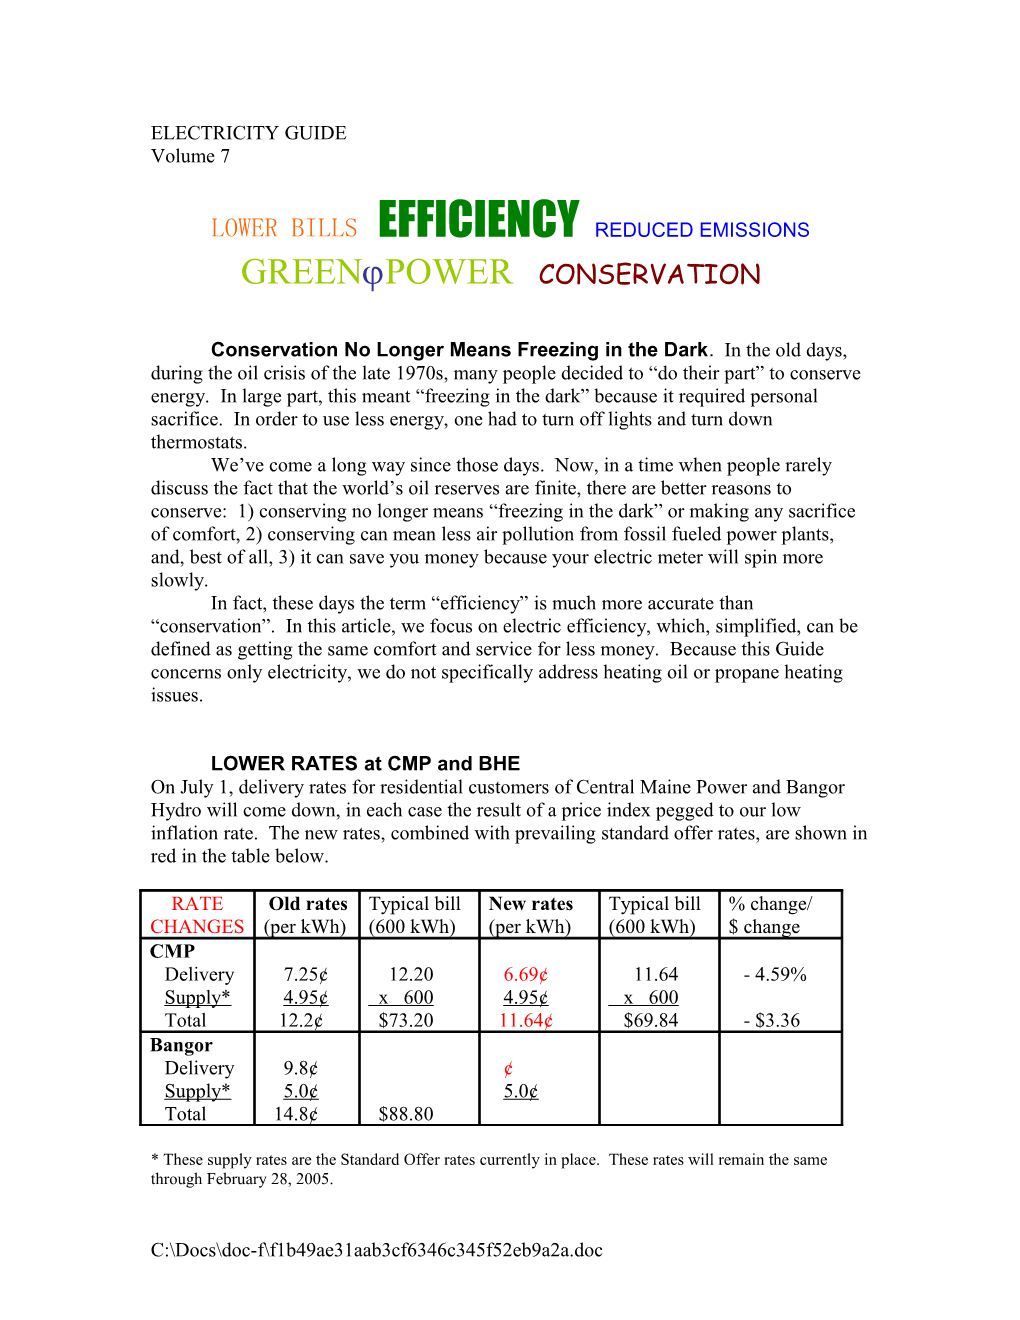 Lower Bills Efficiency Reduced Emissions